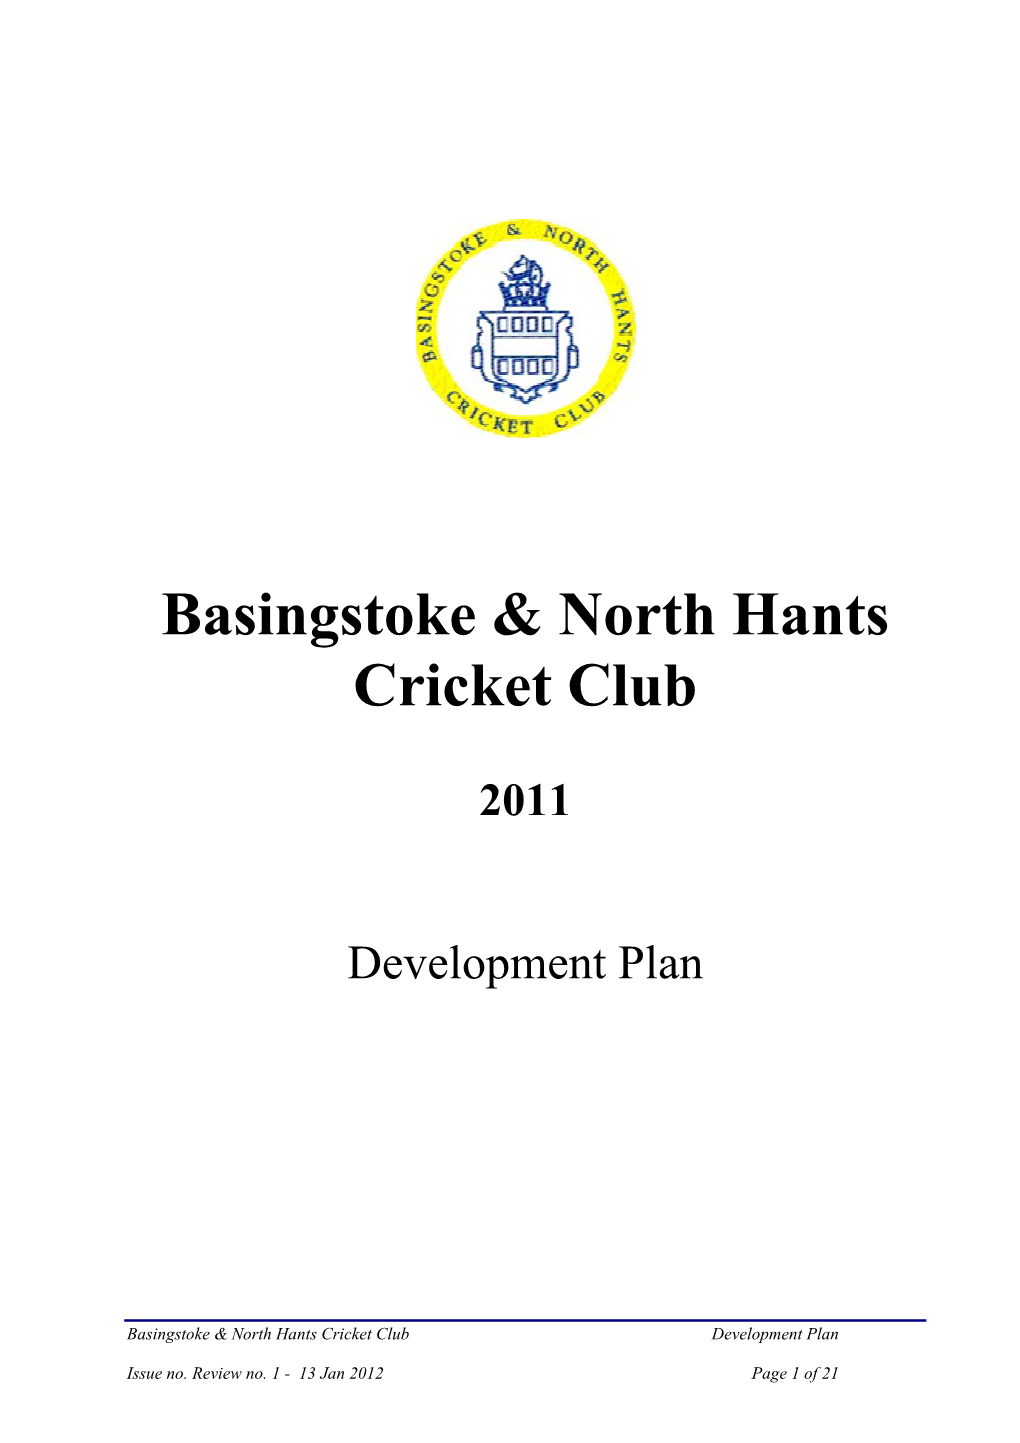 BNHCC Development Plan 2011